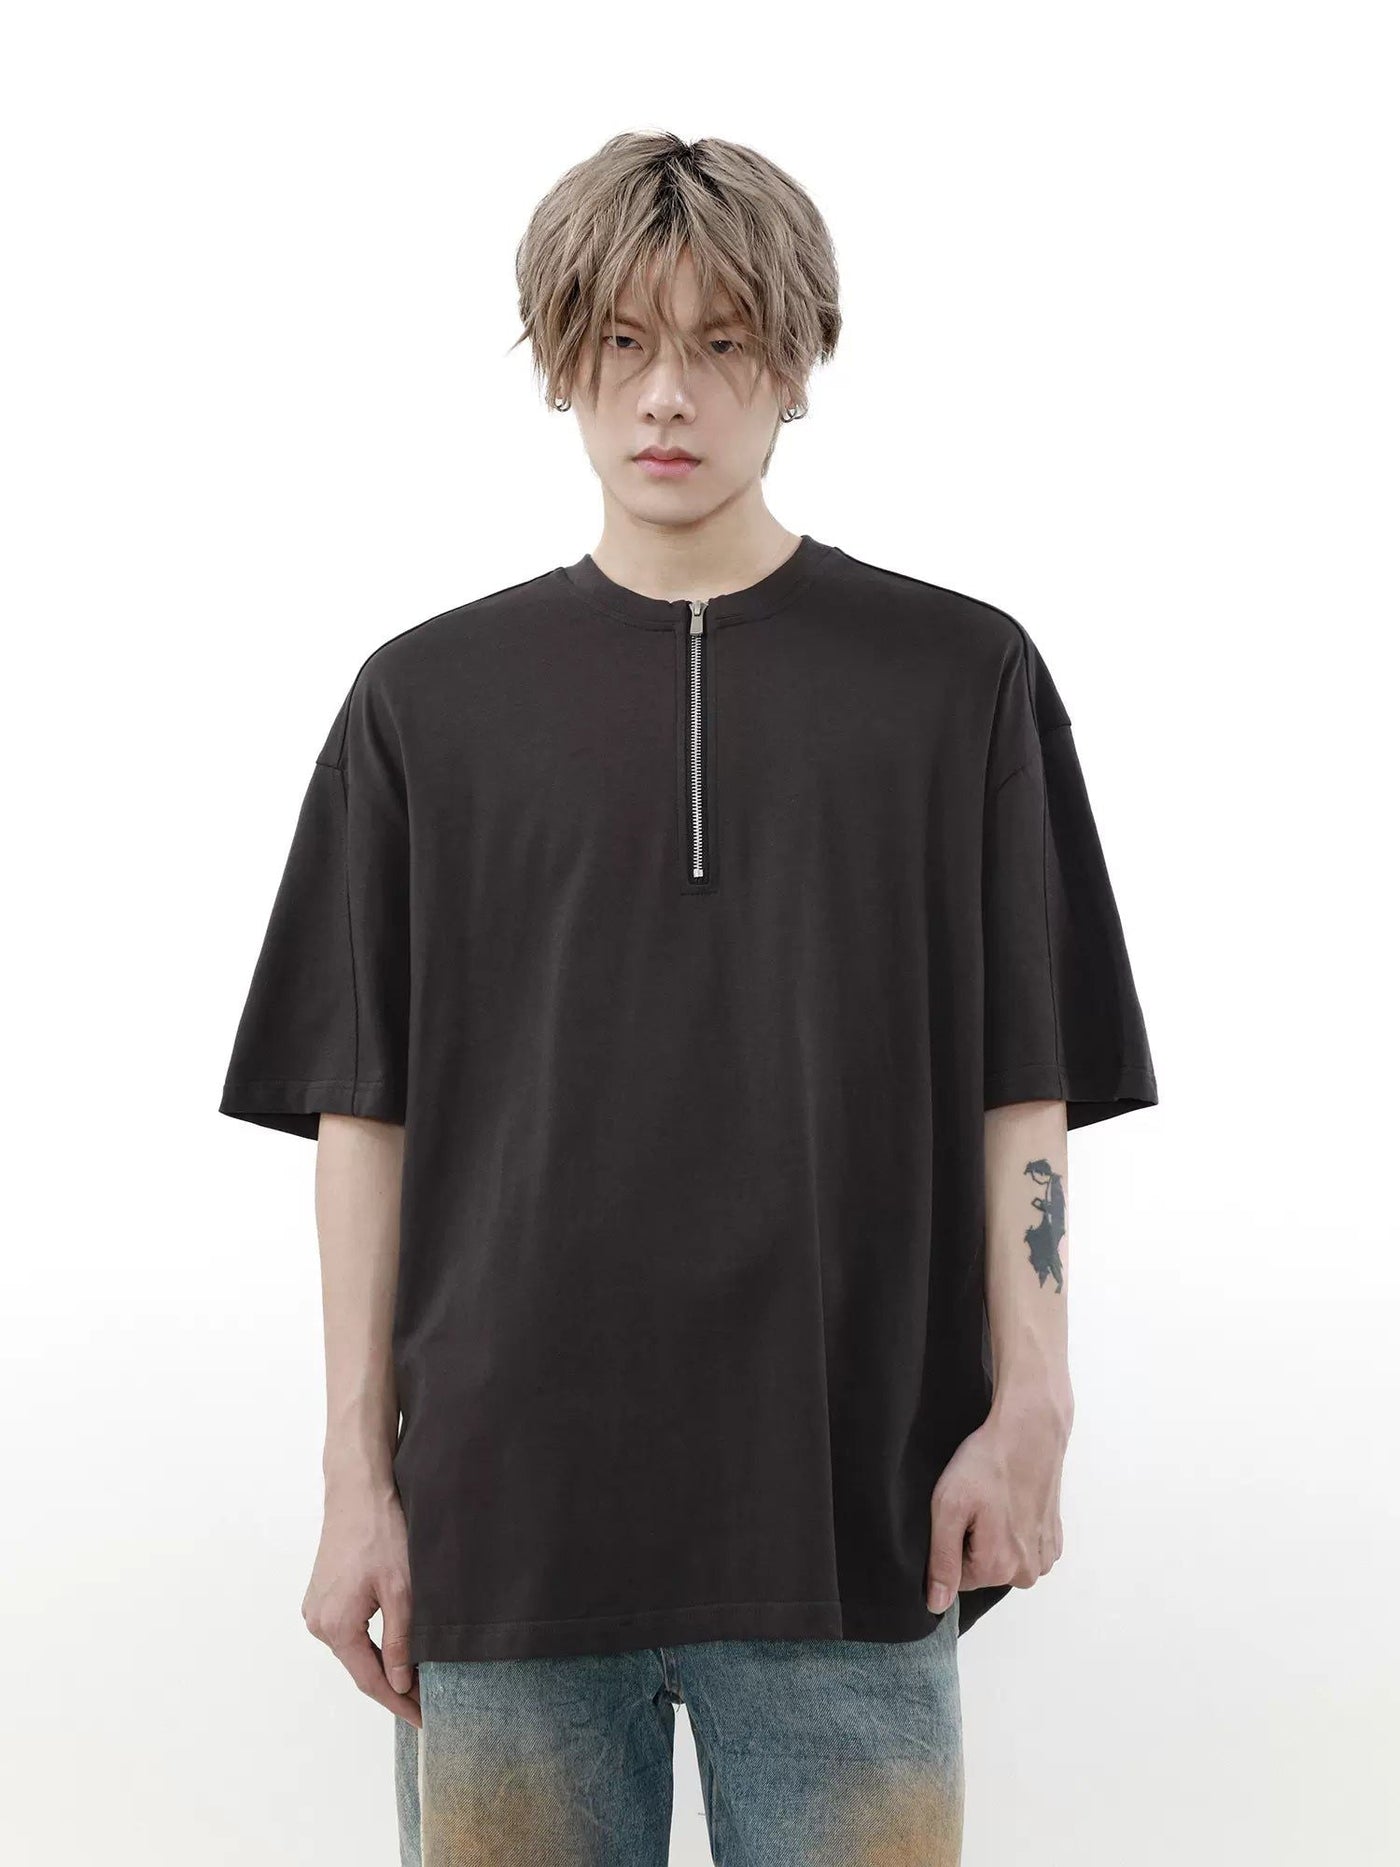 Half-Zipped Versatile T-Shirt Korean Street Fashion T-Shirt By Mr Nearly Shop Online at OH Vault